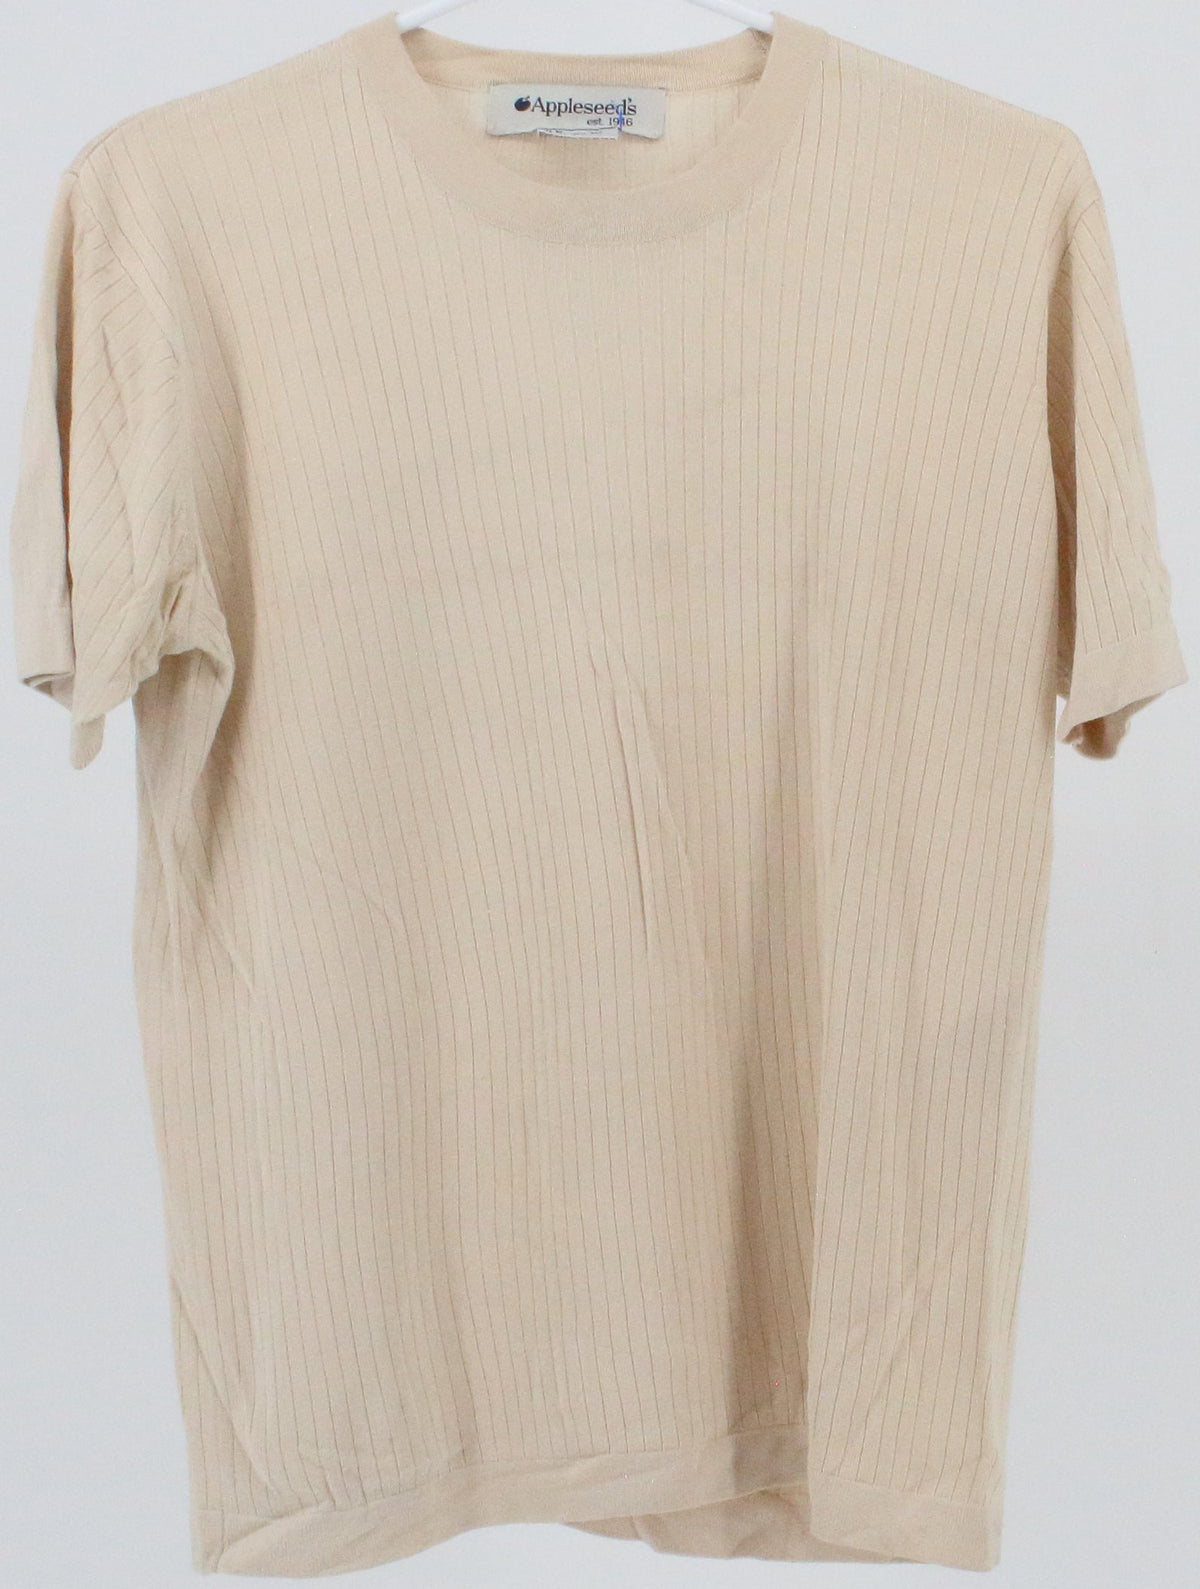 Appleseed's Light Beige Short Sleeve Women's Sweater